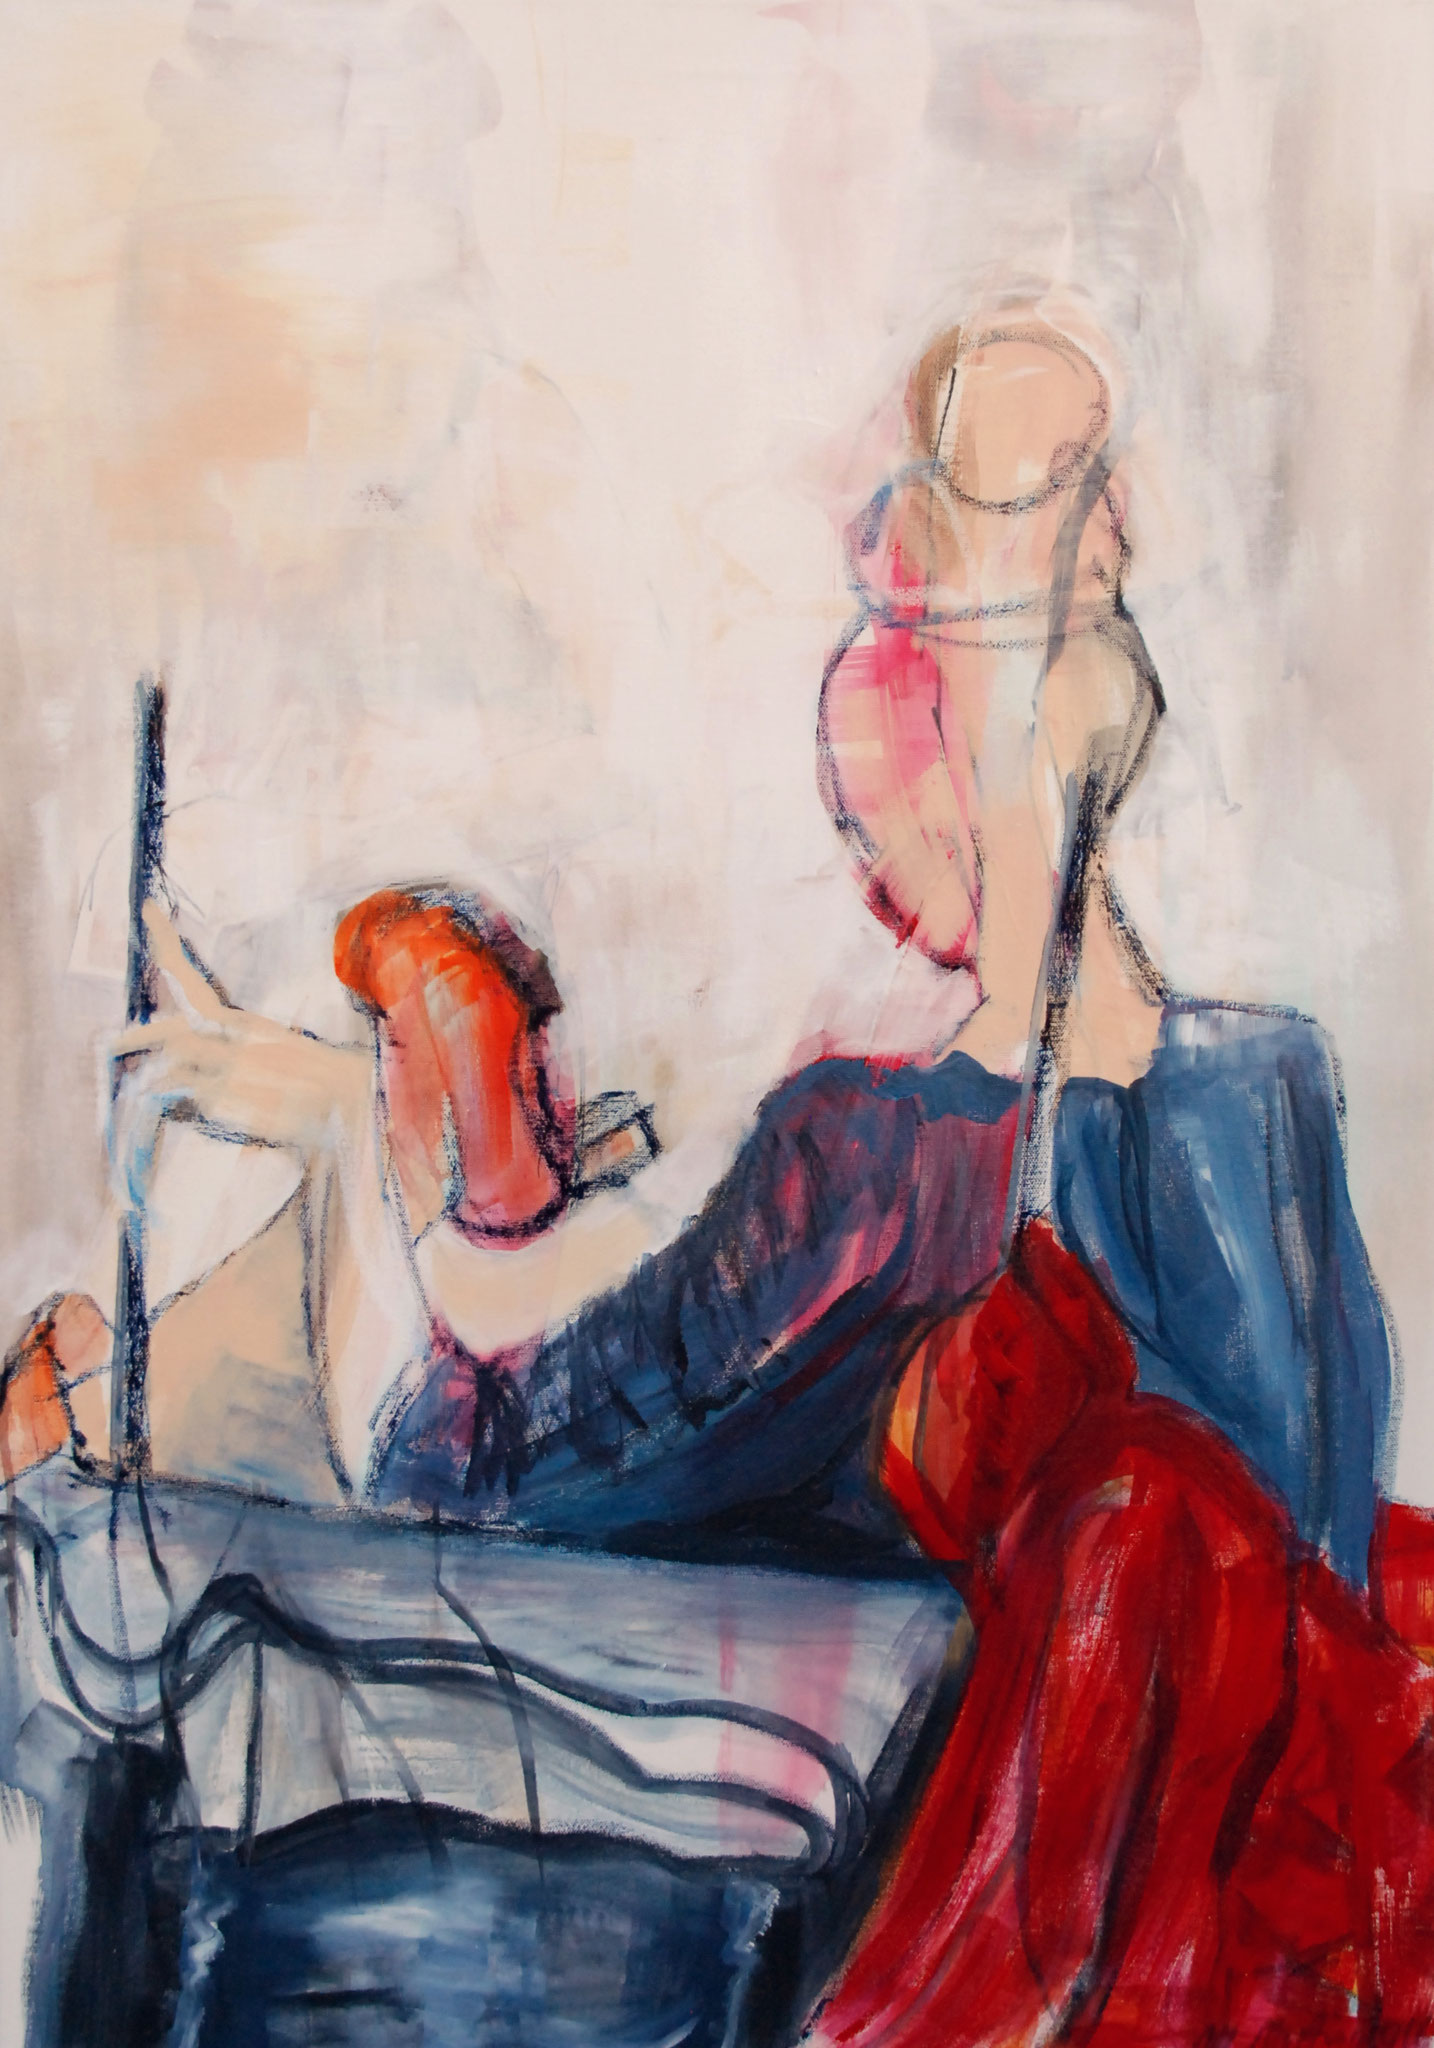 Kristina sitzend, Mixed Media auf Leinwand, 100cm x 70cm  